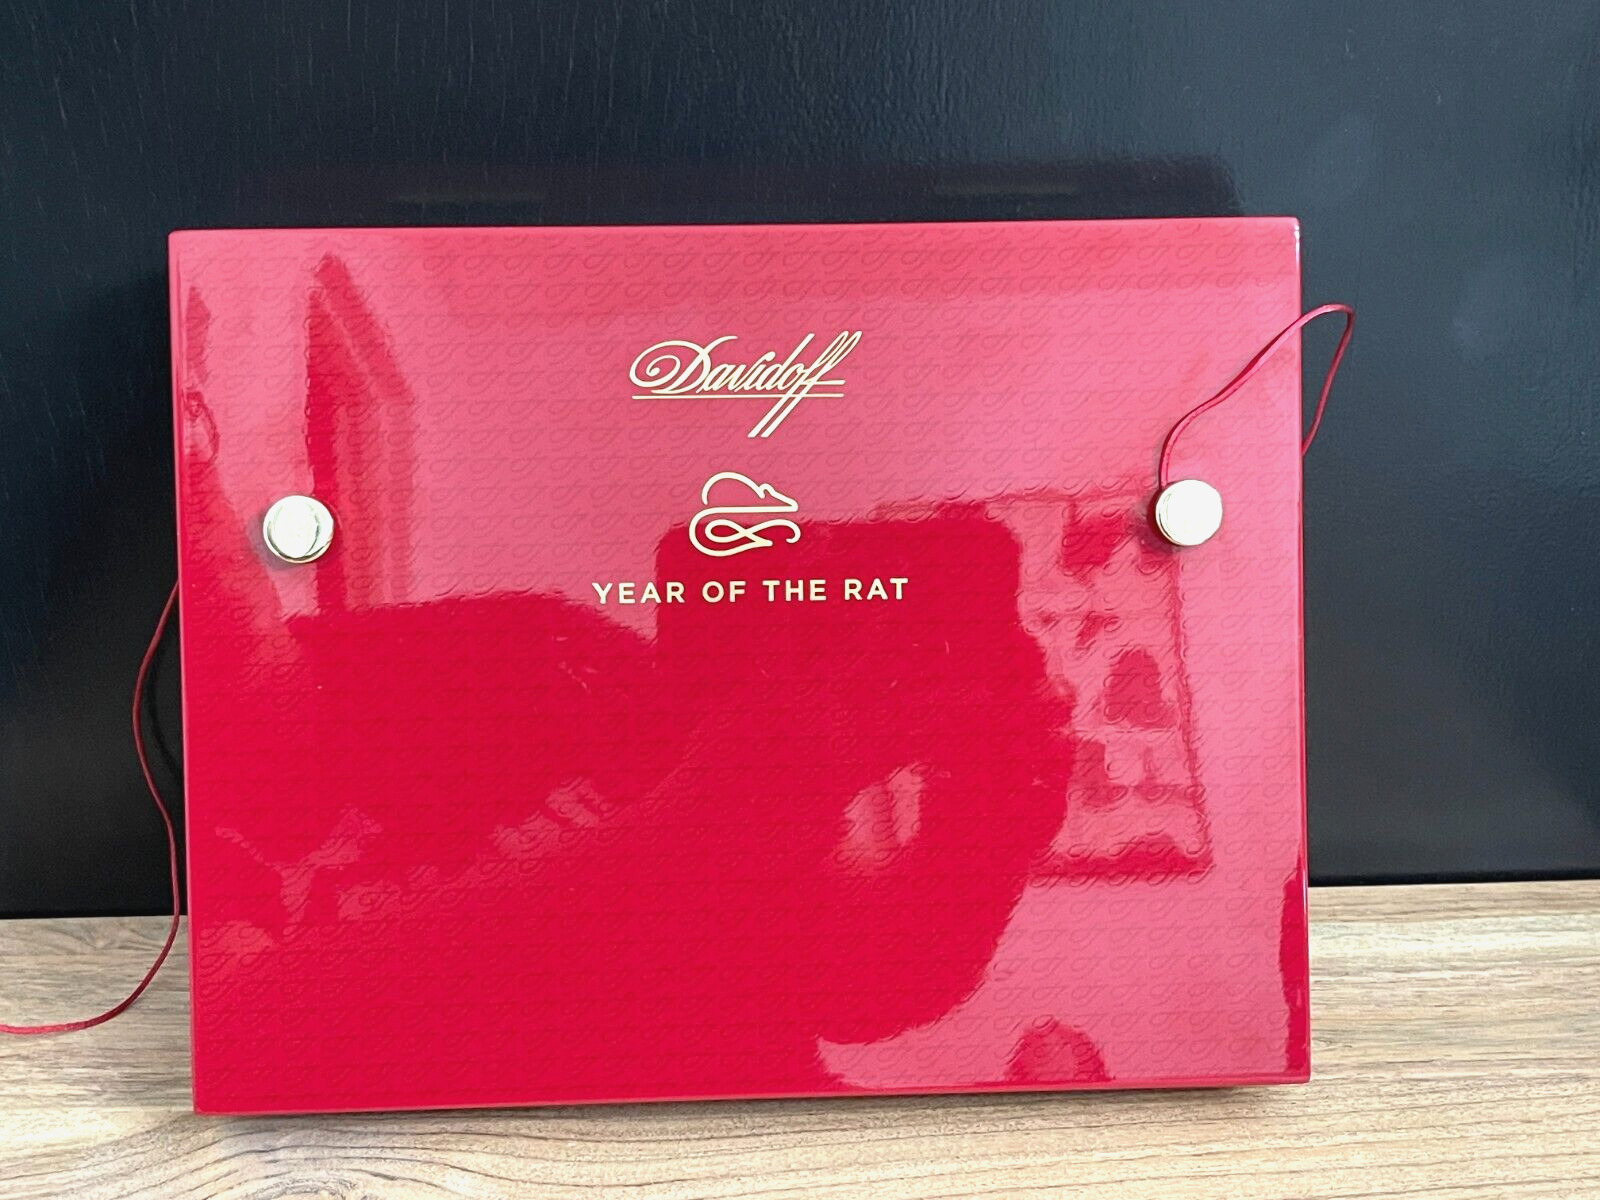 Davidoff Year of the Rat Empty Wooden Cigar Box 10x7.5x1.75 Red Lipstick